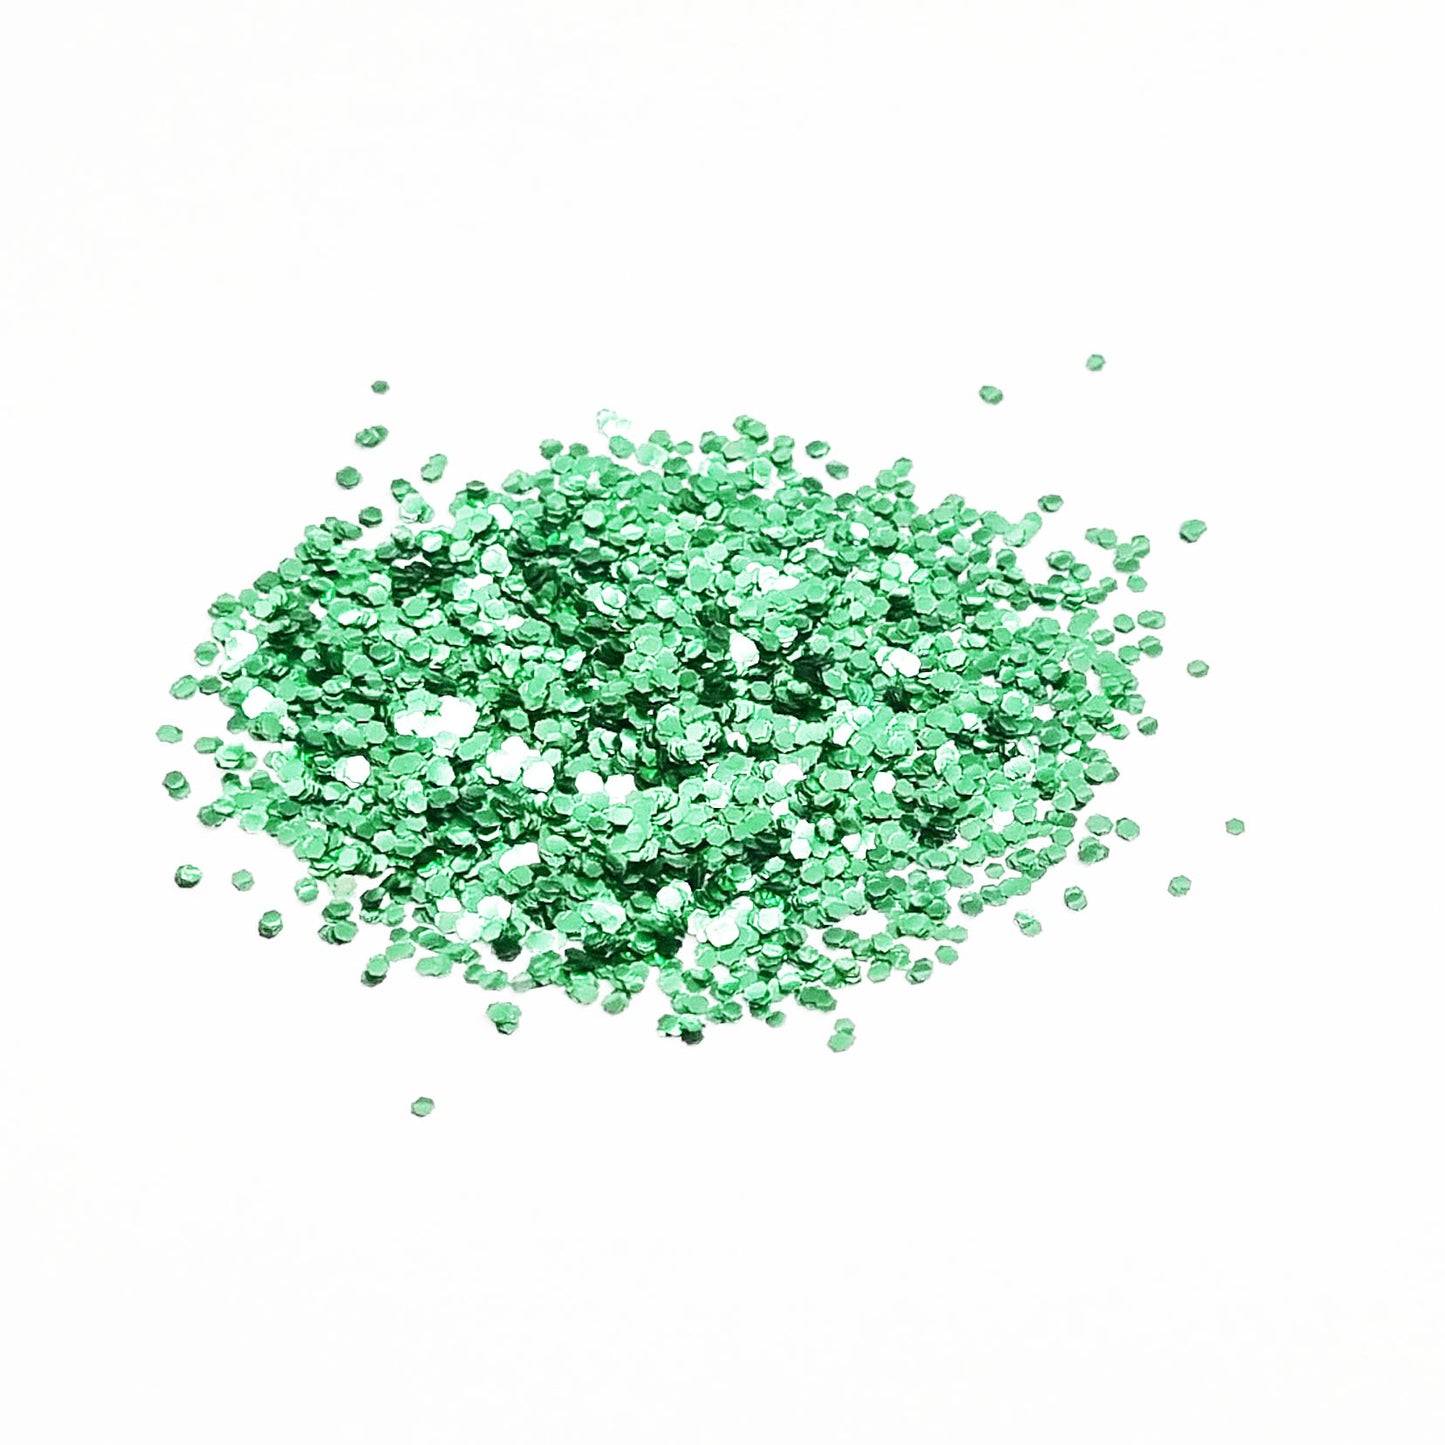 Spring Green Biodegradable Cosmetic Glitter | Medium | Truly Personal | Wax Melt Bath Bombs Soap